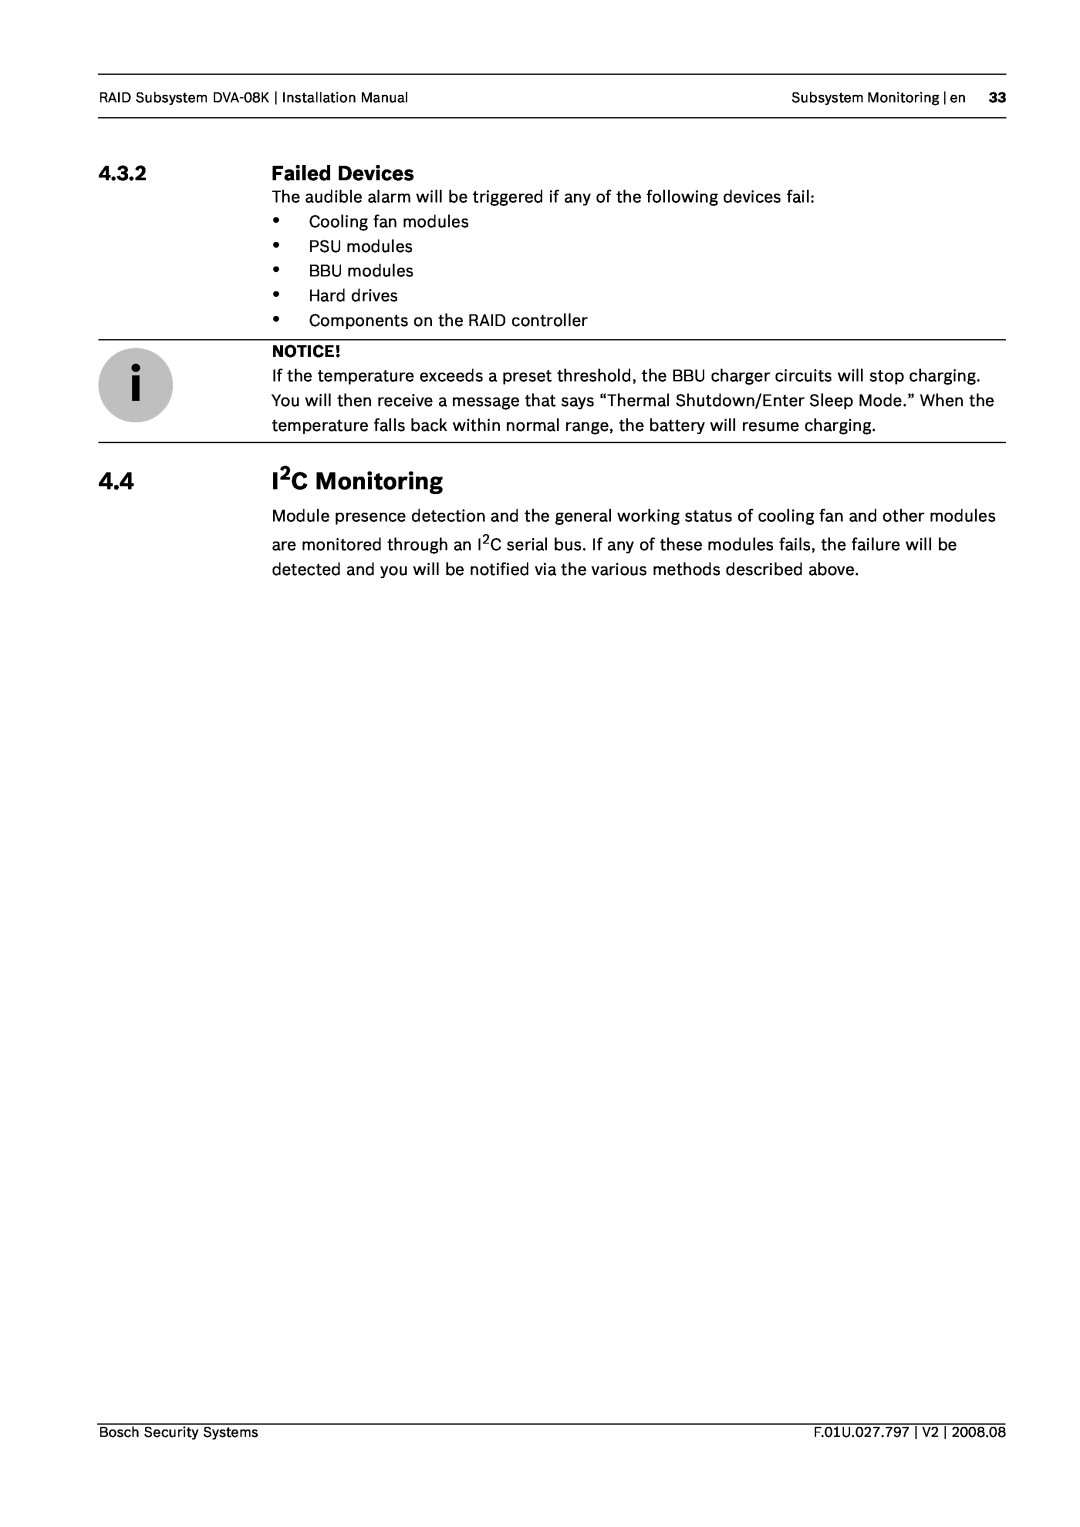 Bosch Appliances DVA-08K manual 4.4I2C Monitoring, 4.3.2, Failed Devices 